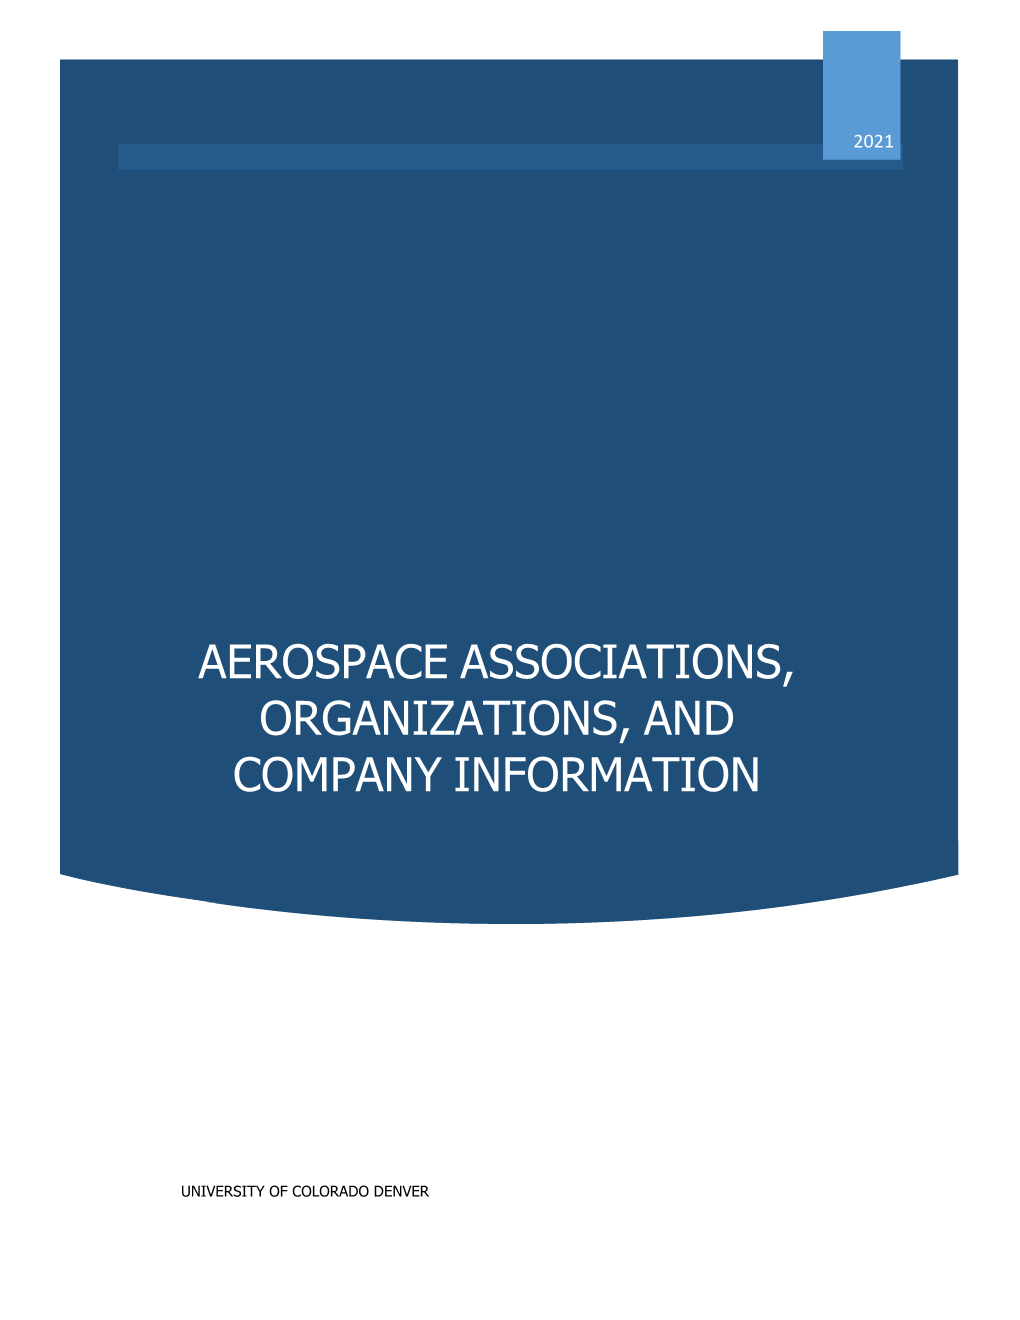 Aerospace Associations, Organizations, and Company Information